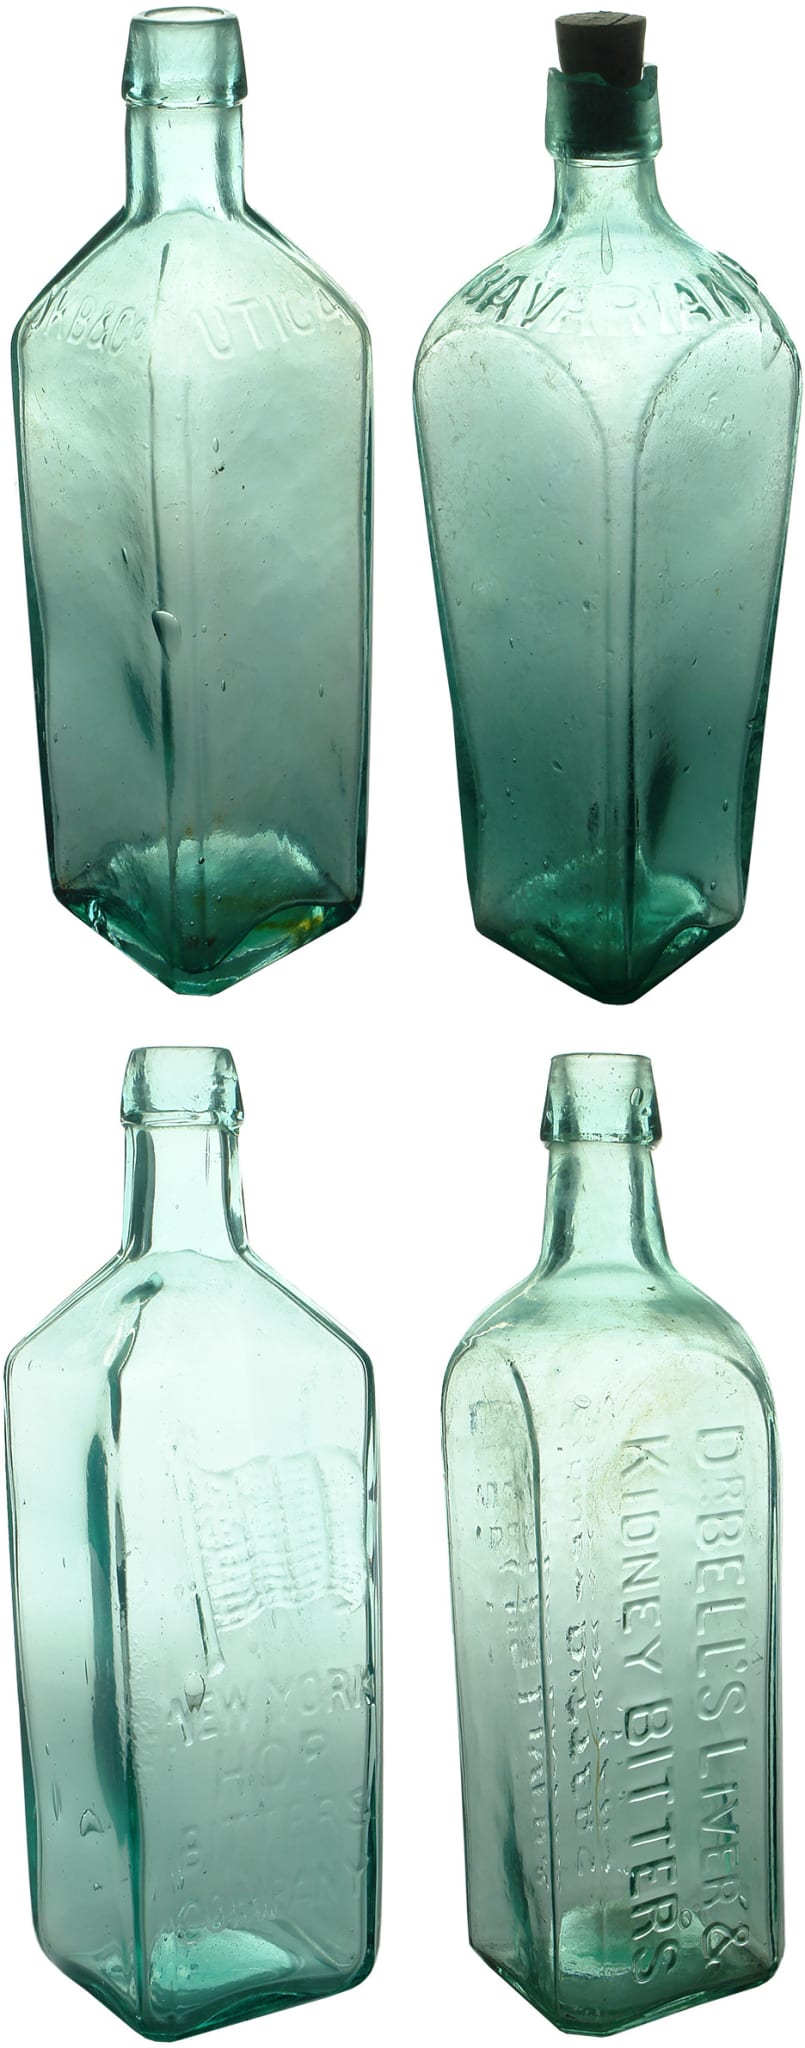 Antique Australian Bitters Bottles